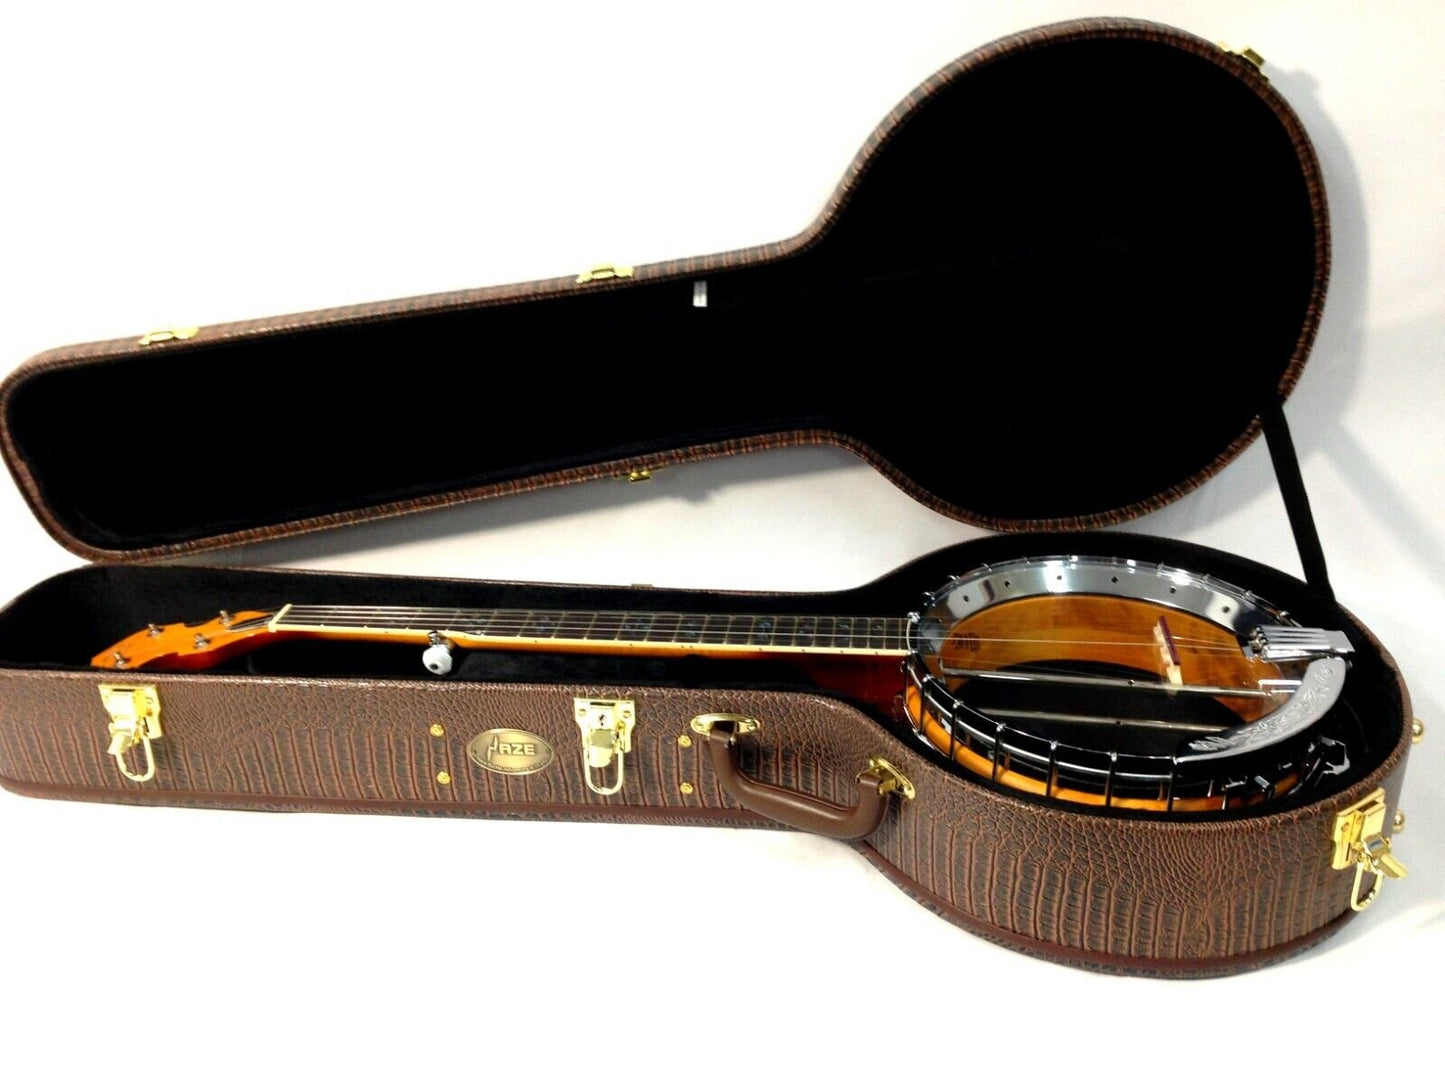 Haze HDEL19BANJC Premium Flat-Top Banjo Hard Case, Lockable w/Key, Brown Crocodile Skin